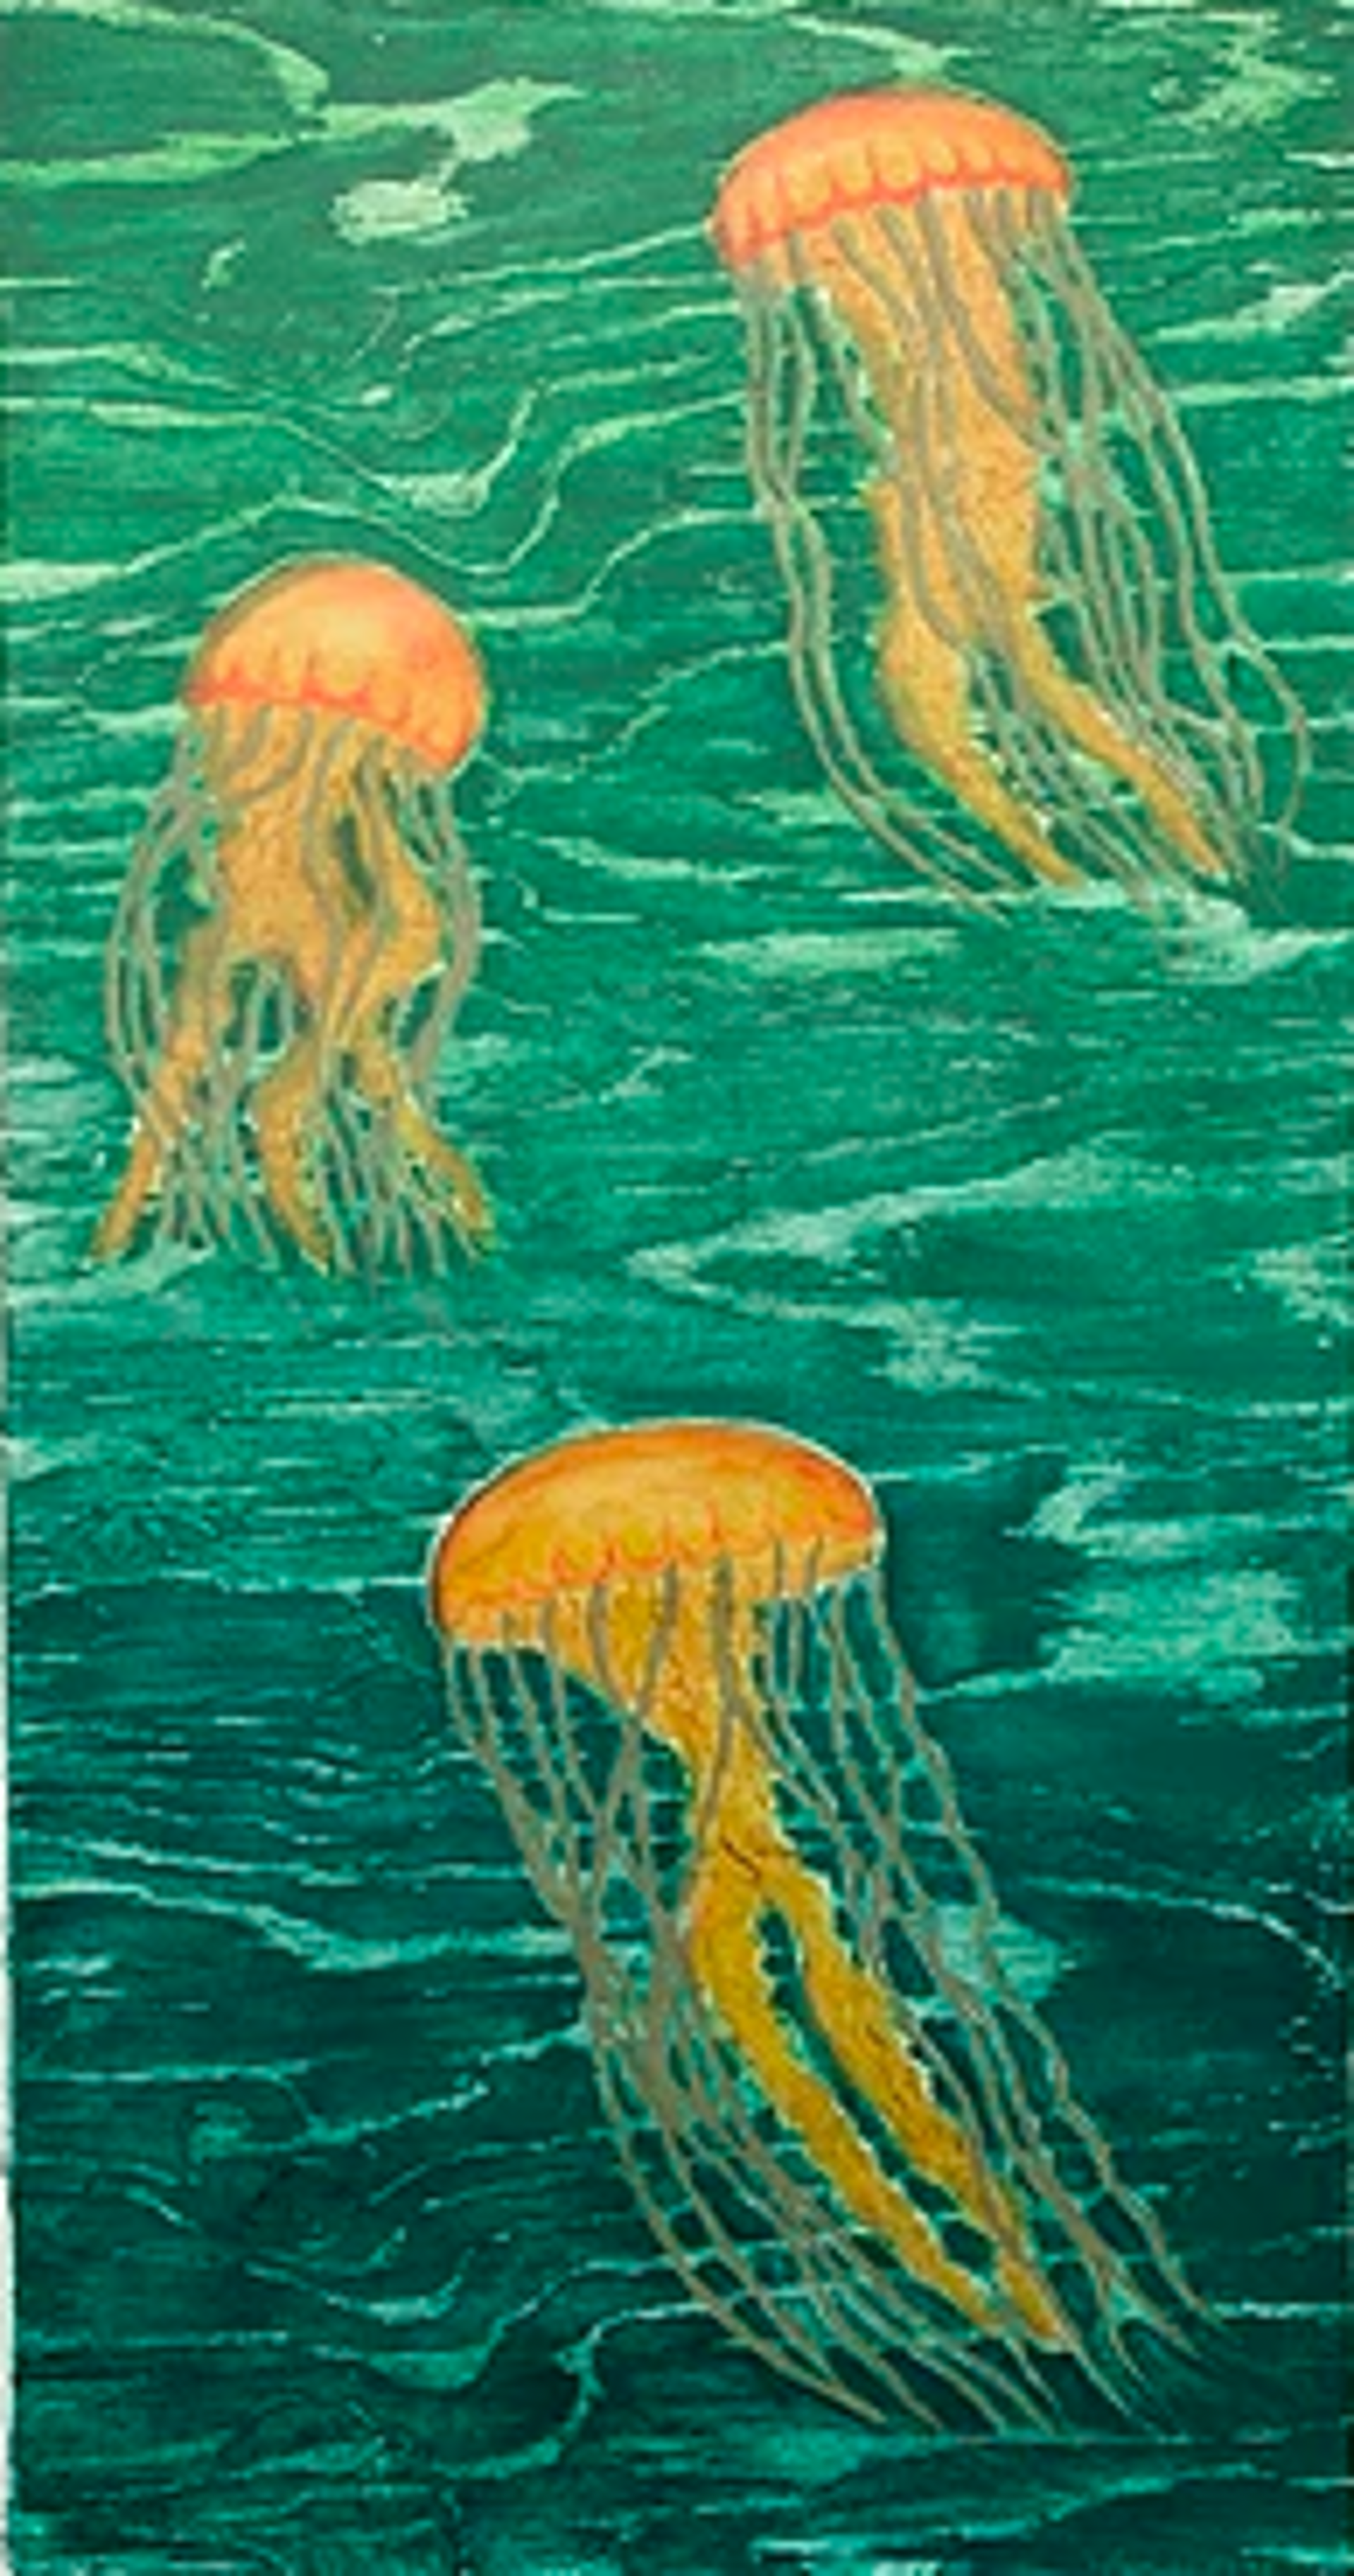 Jellyfish Rising by David Hefner